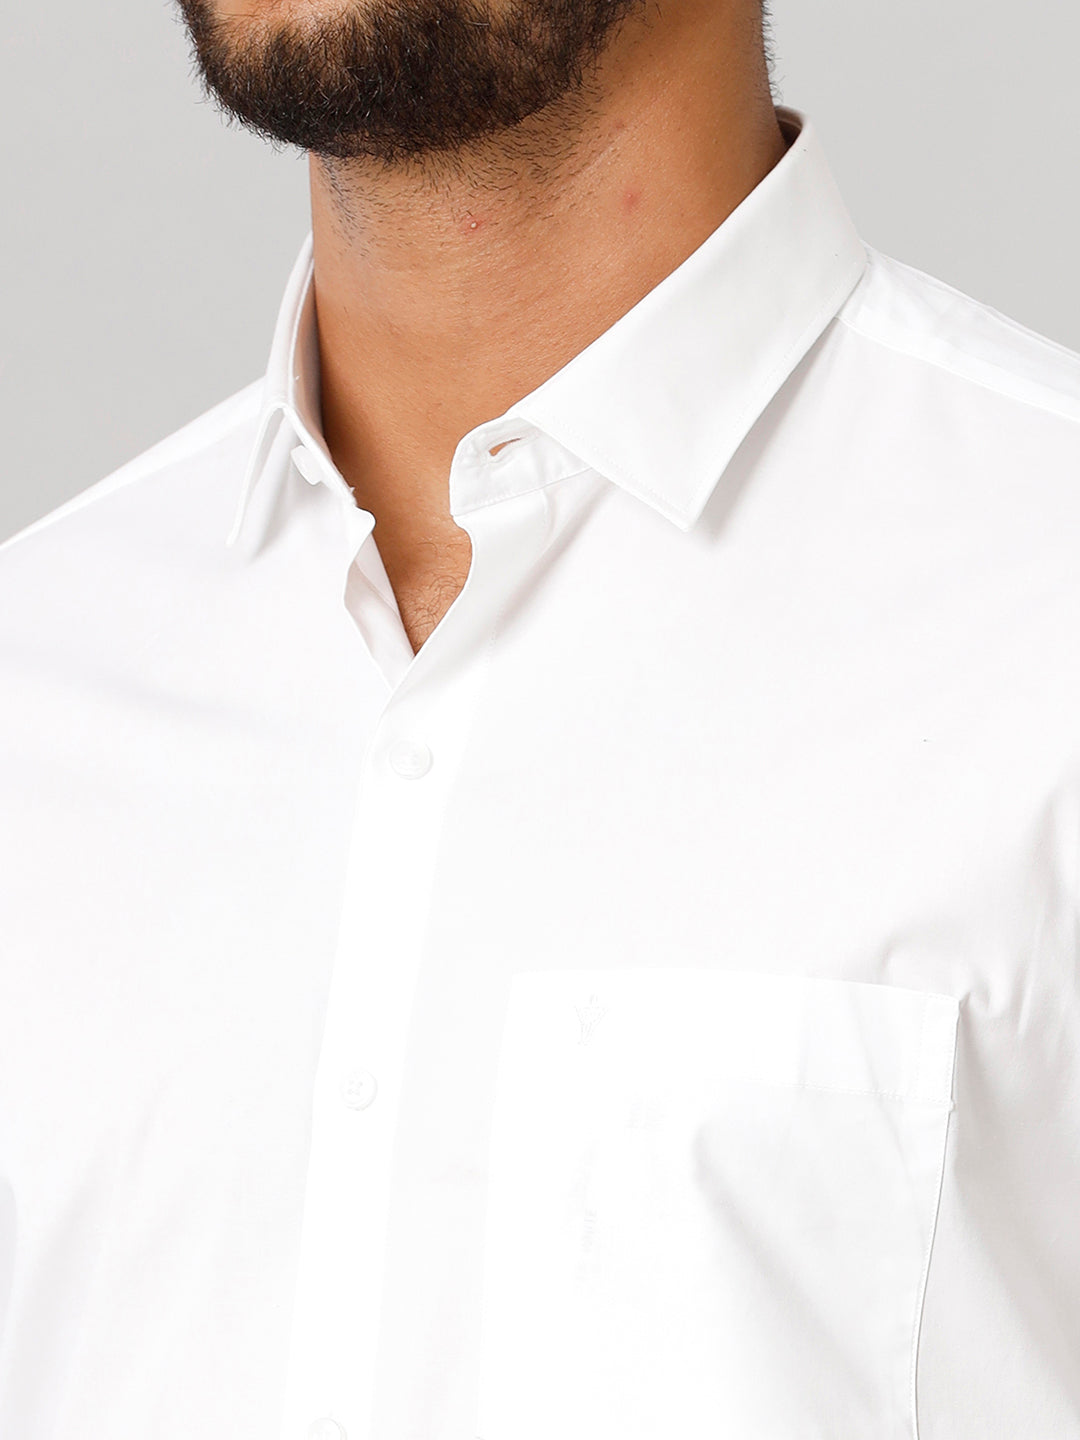 Mens Uniform Cotton White Shirt Half Sleeves-Zoom view